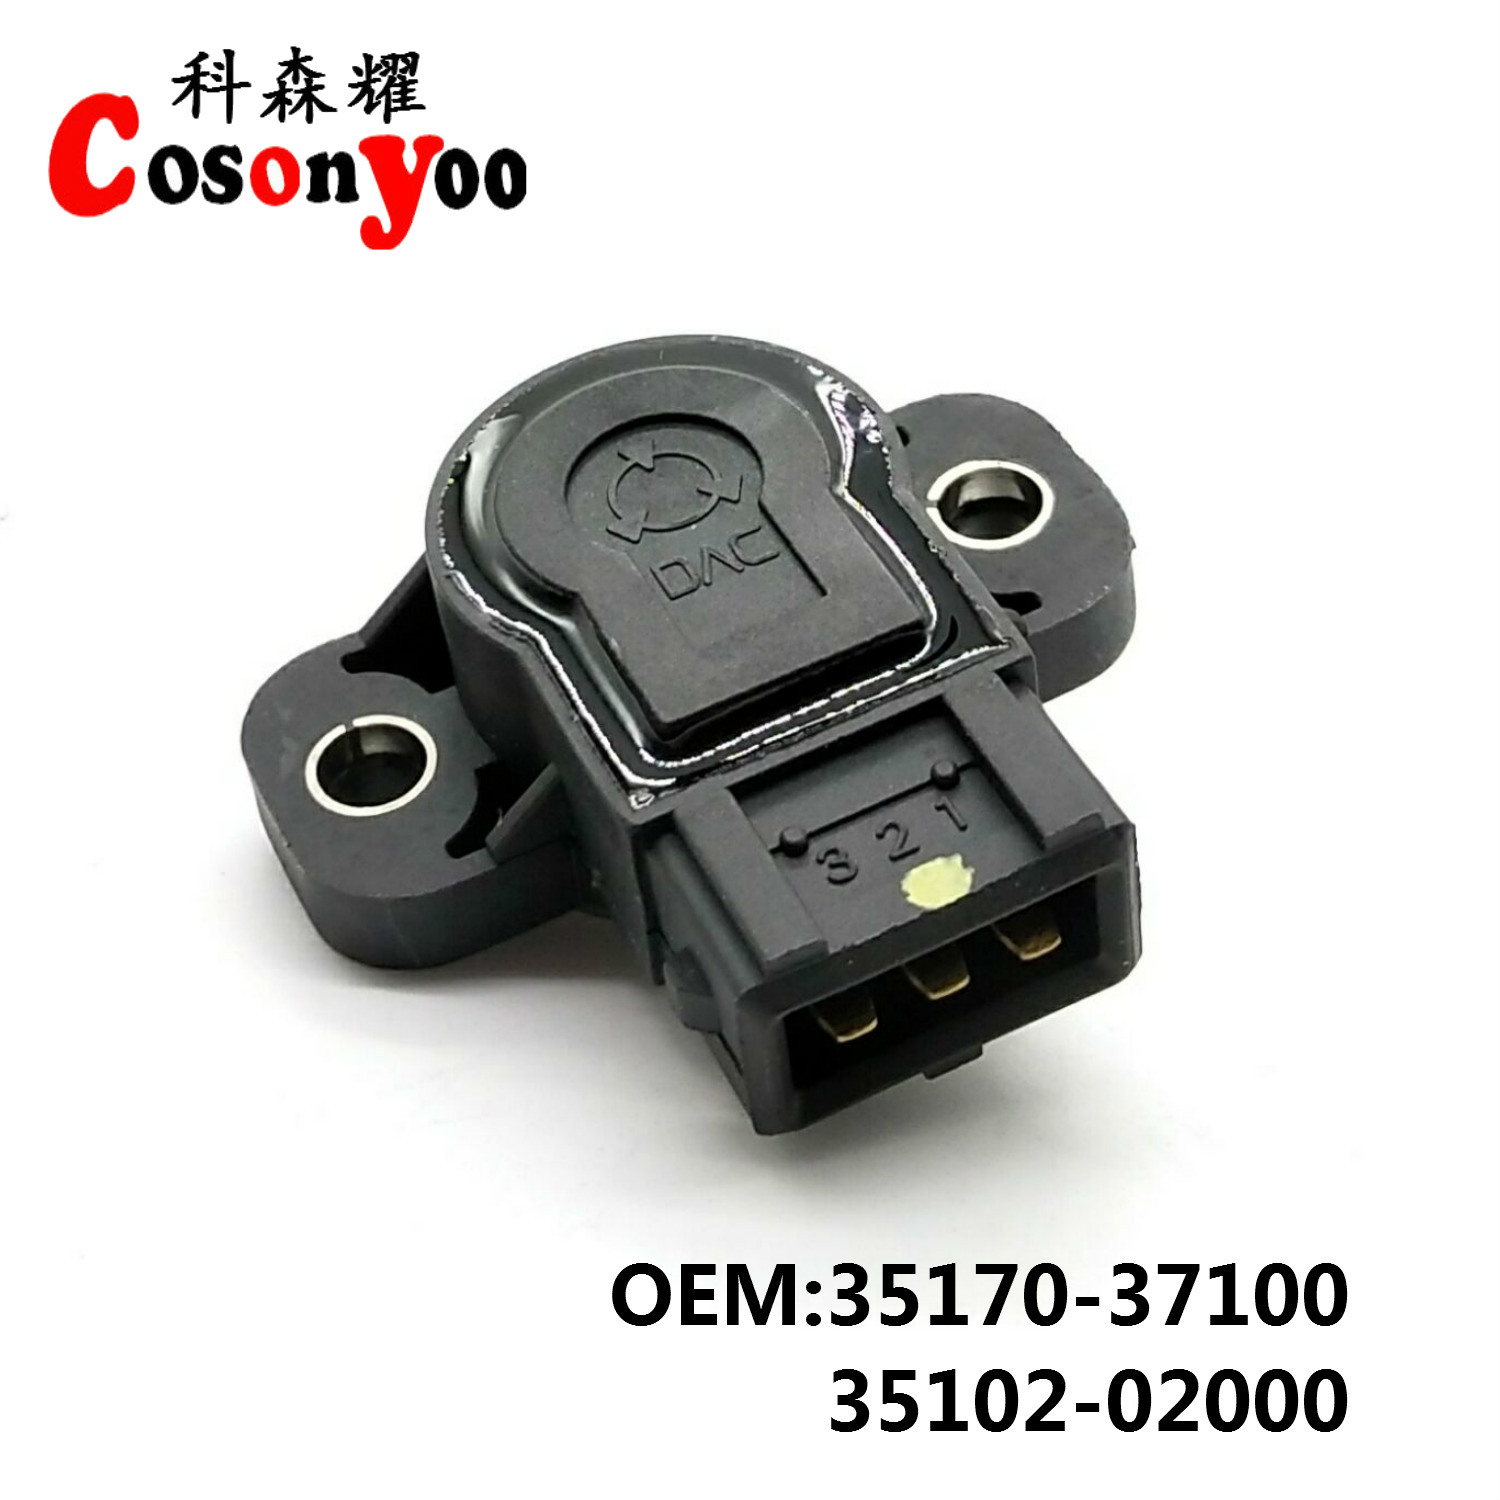 Automobile Throttle Position Sensor, OEM: 35170-37100. Refine 2.4 Imported Machine.